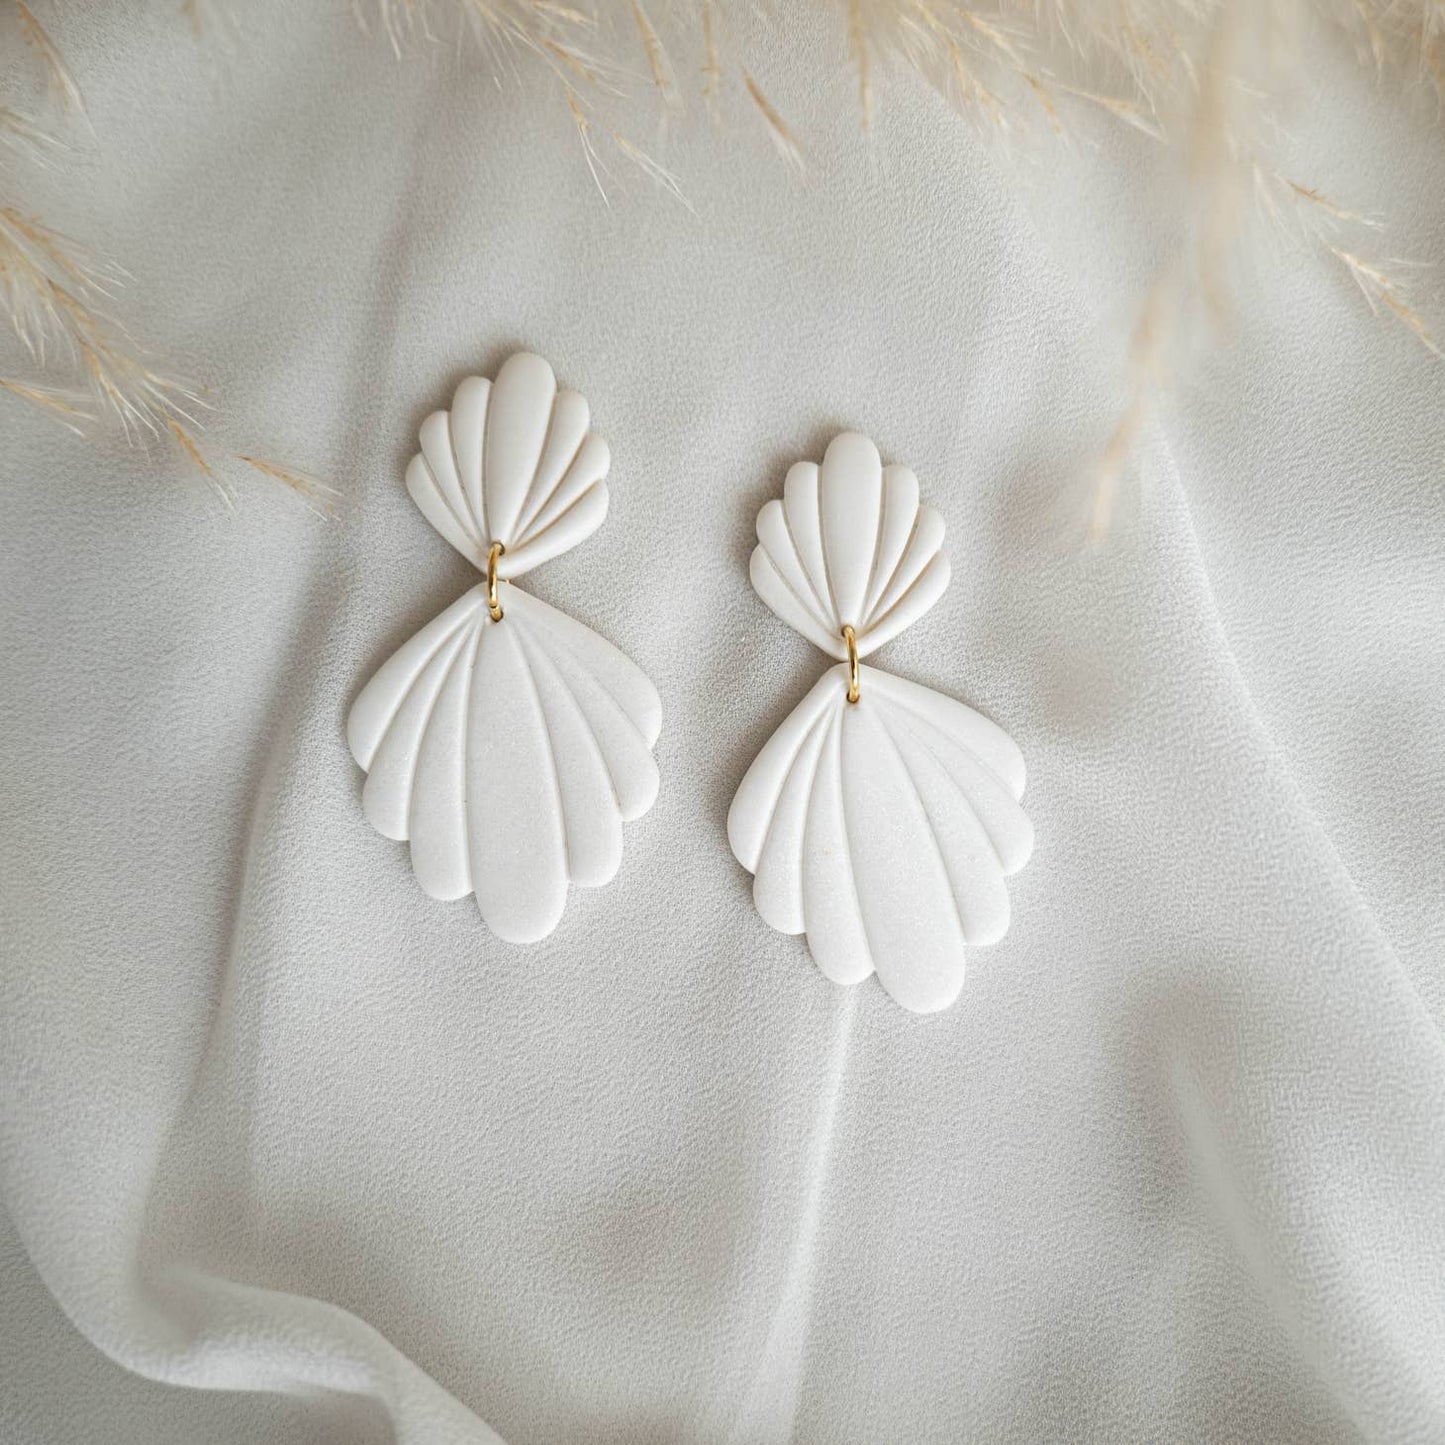 White shell shape earrings